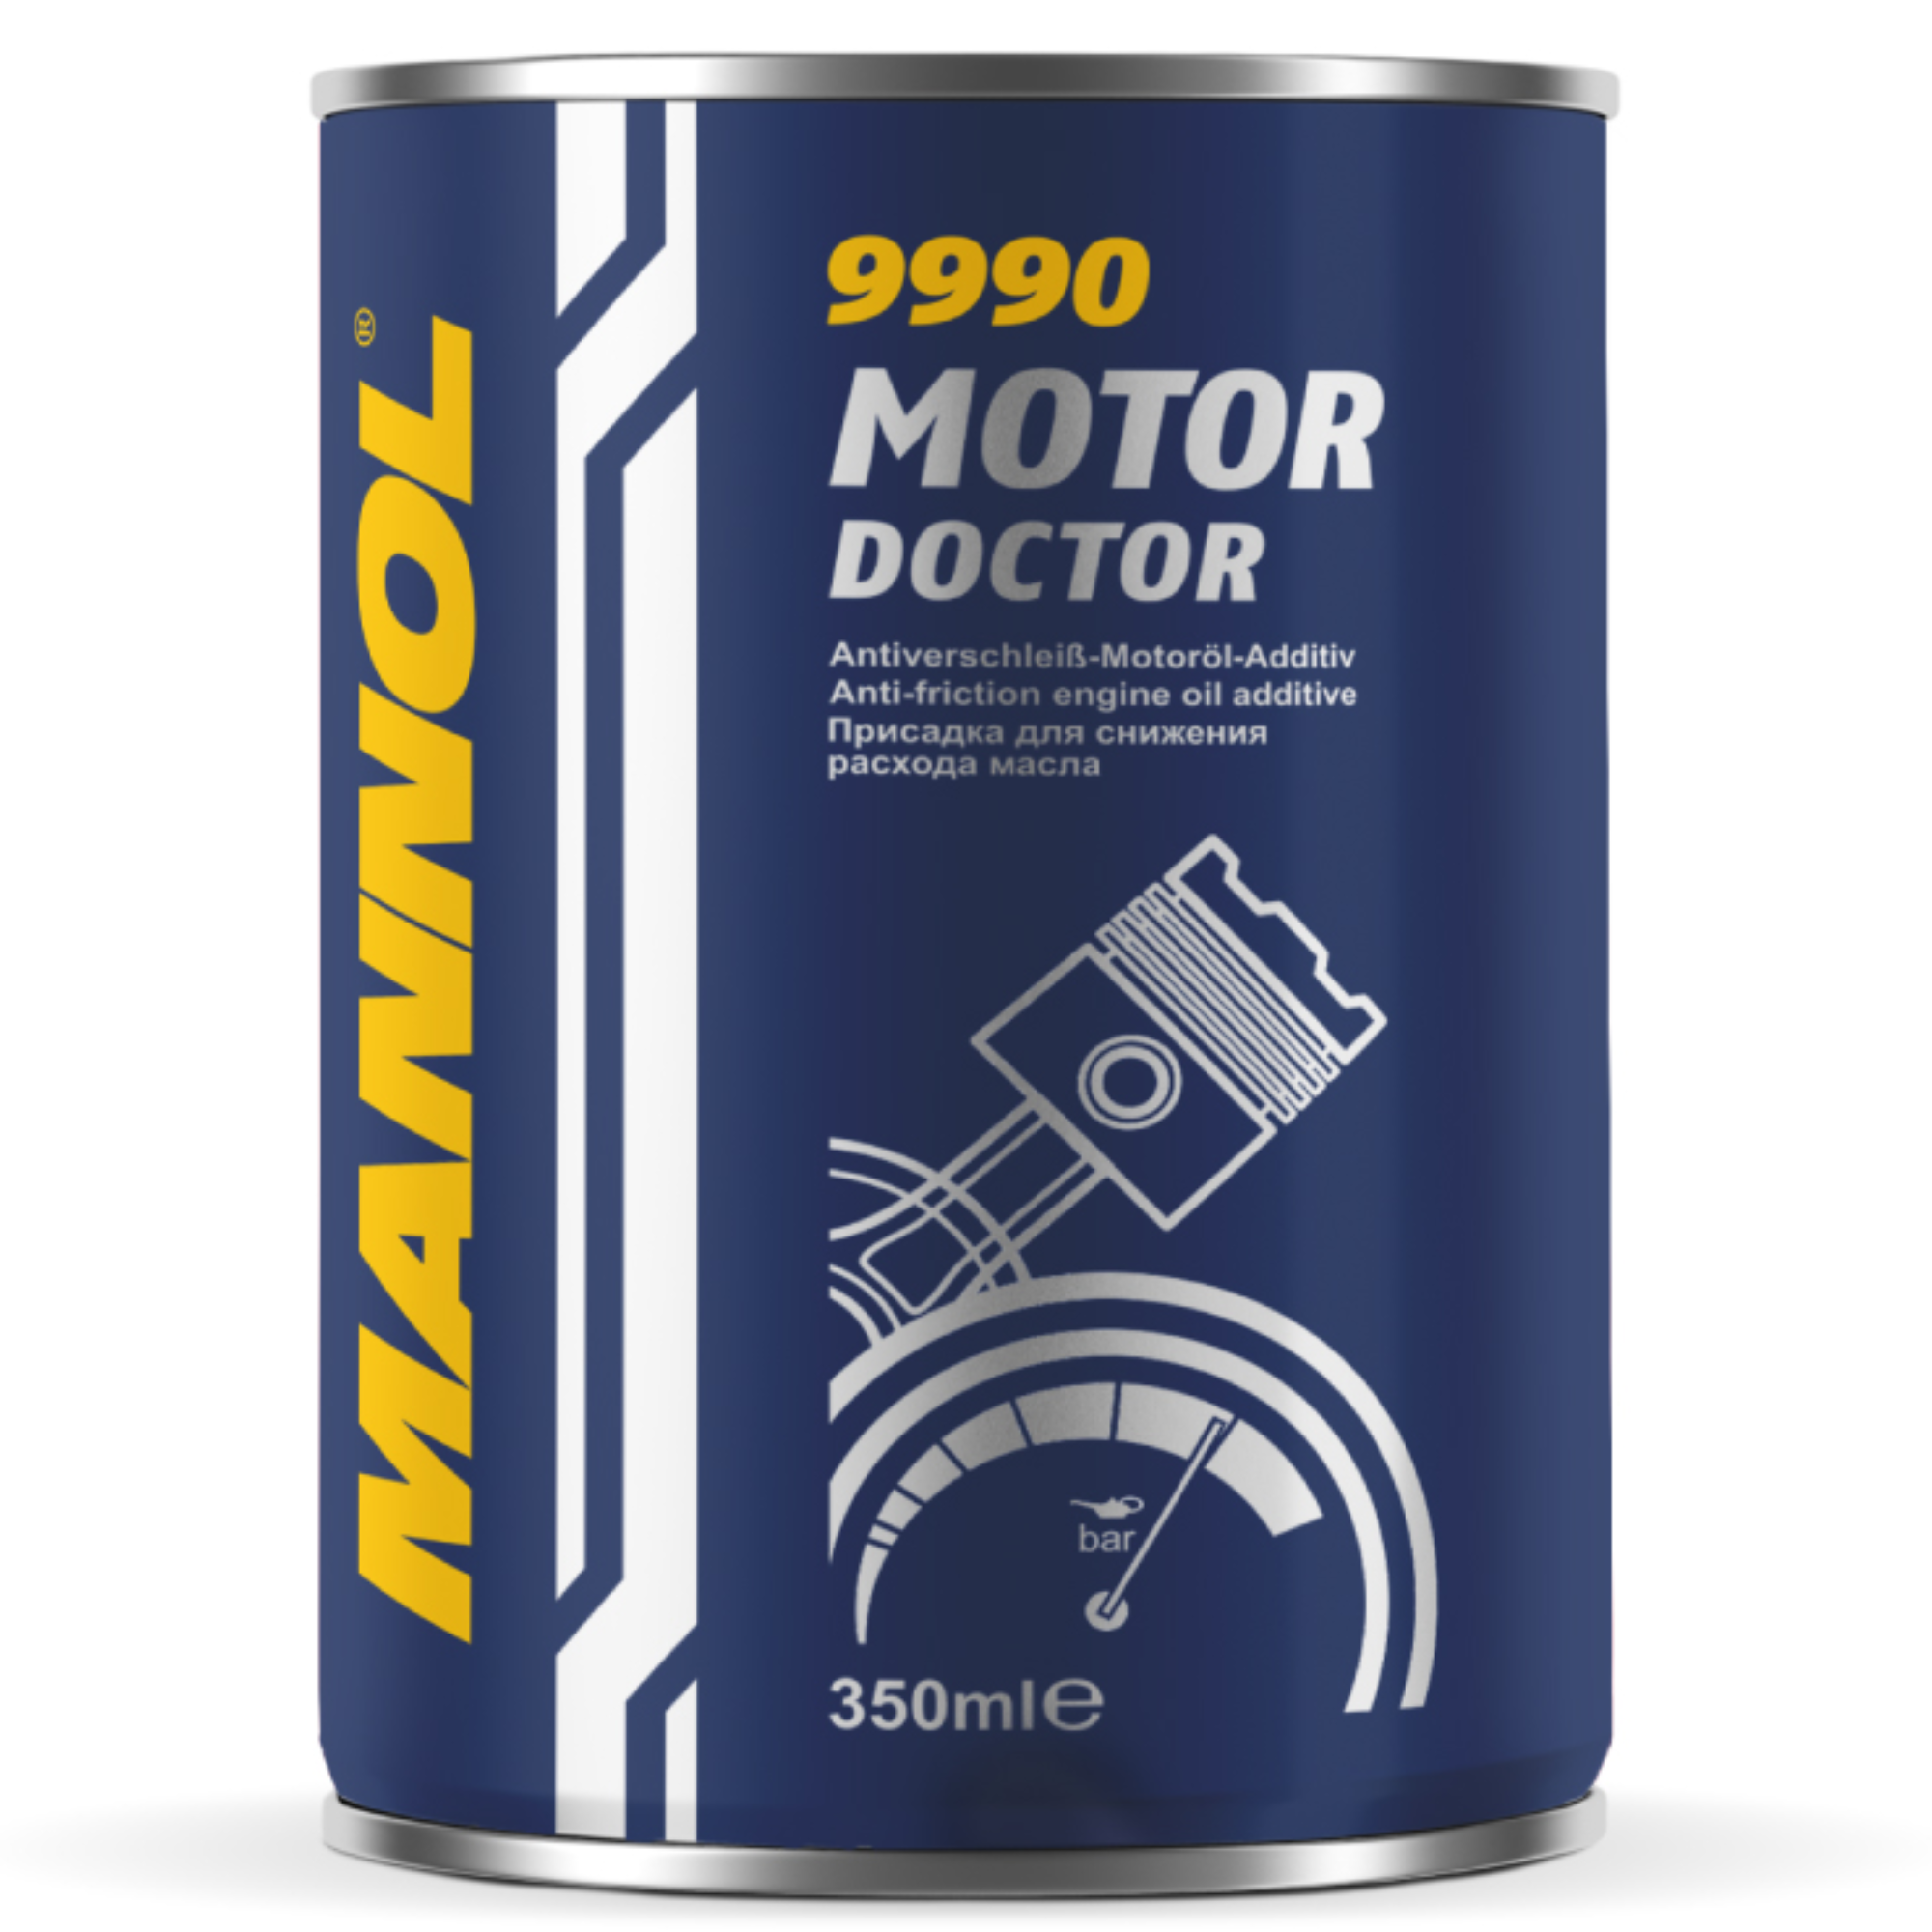 MANNOL Motor Doctor 9990